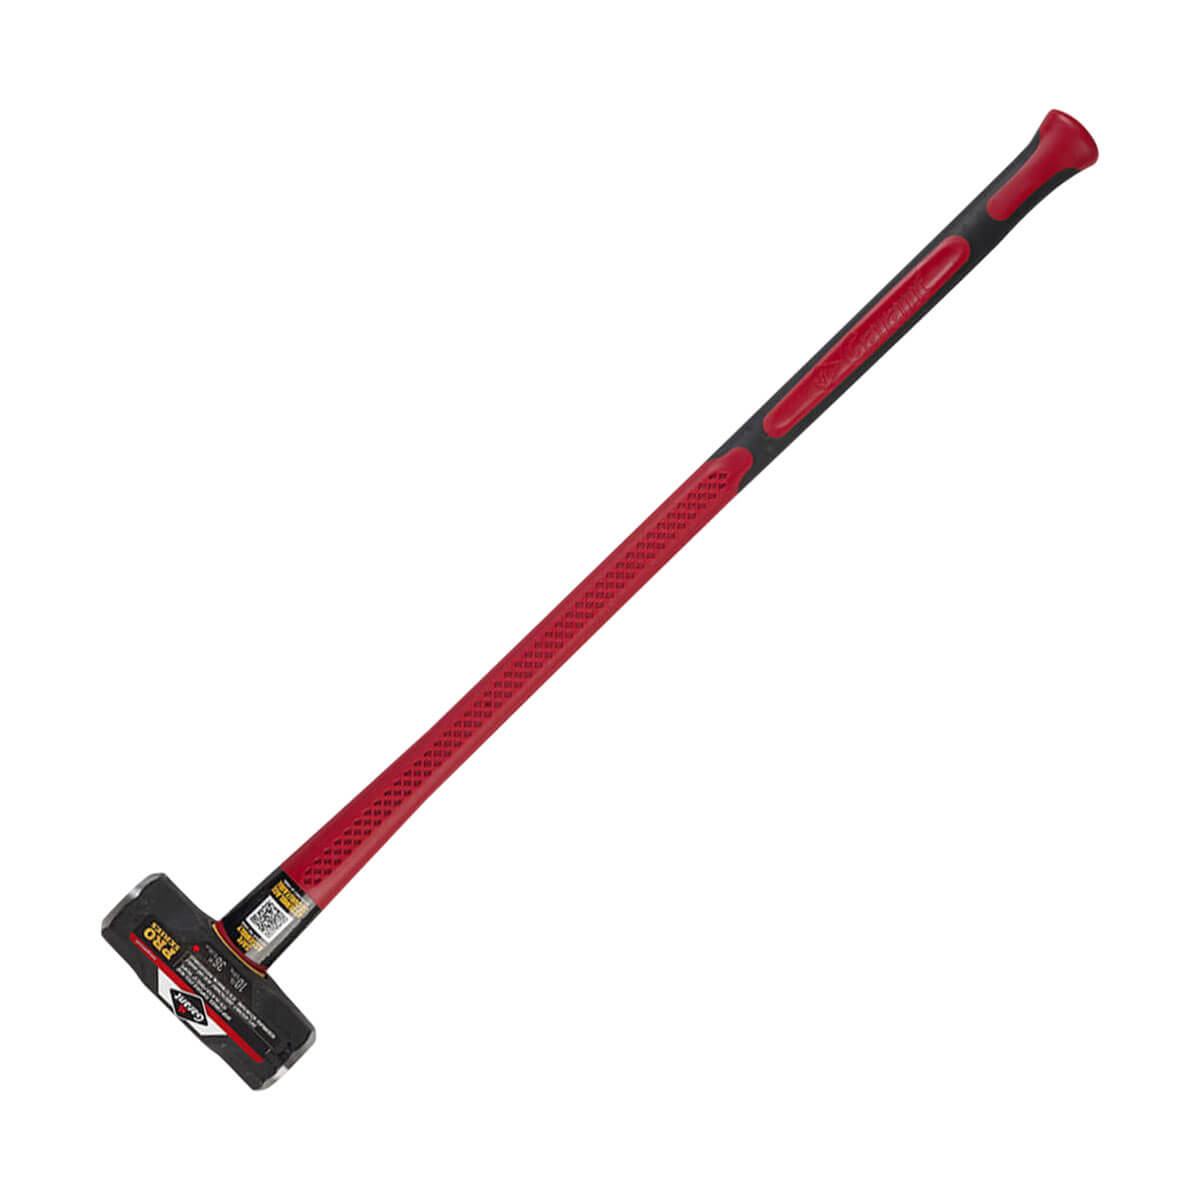 Sledge Hammer - 32-in - 6 lb